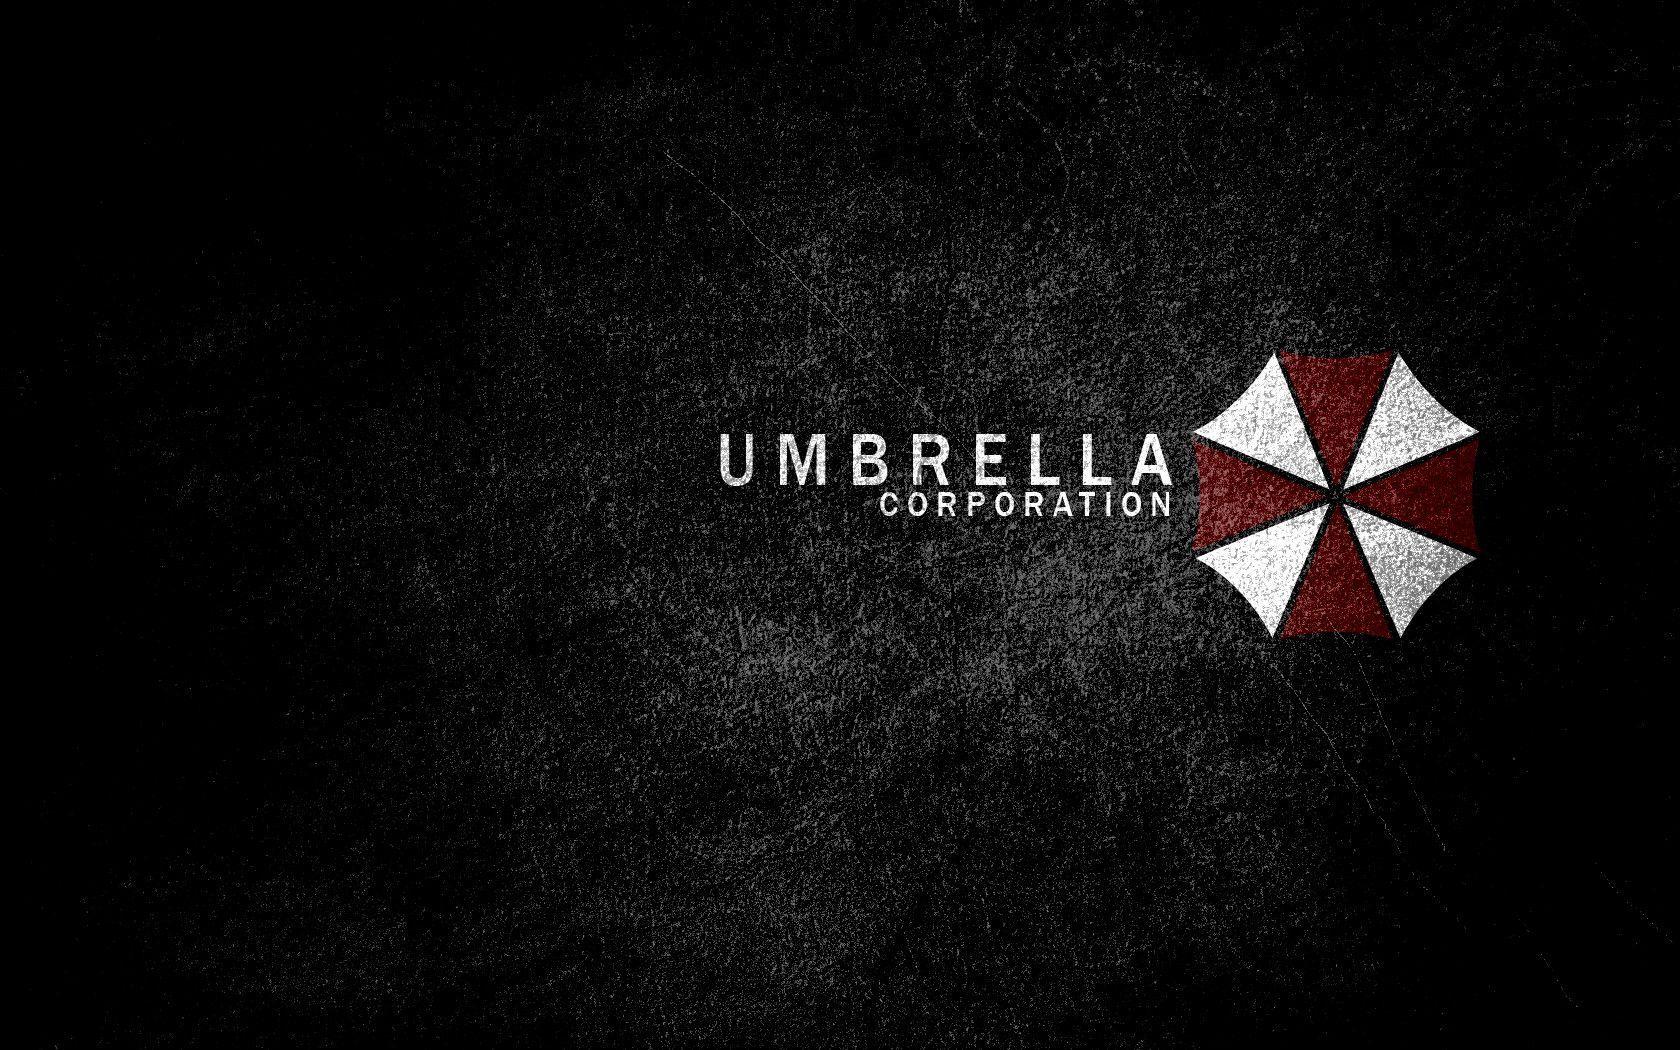 Umbrella Corp Wallpaper Free Umbrella Corp Background